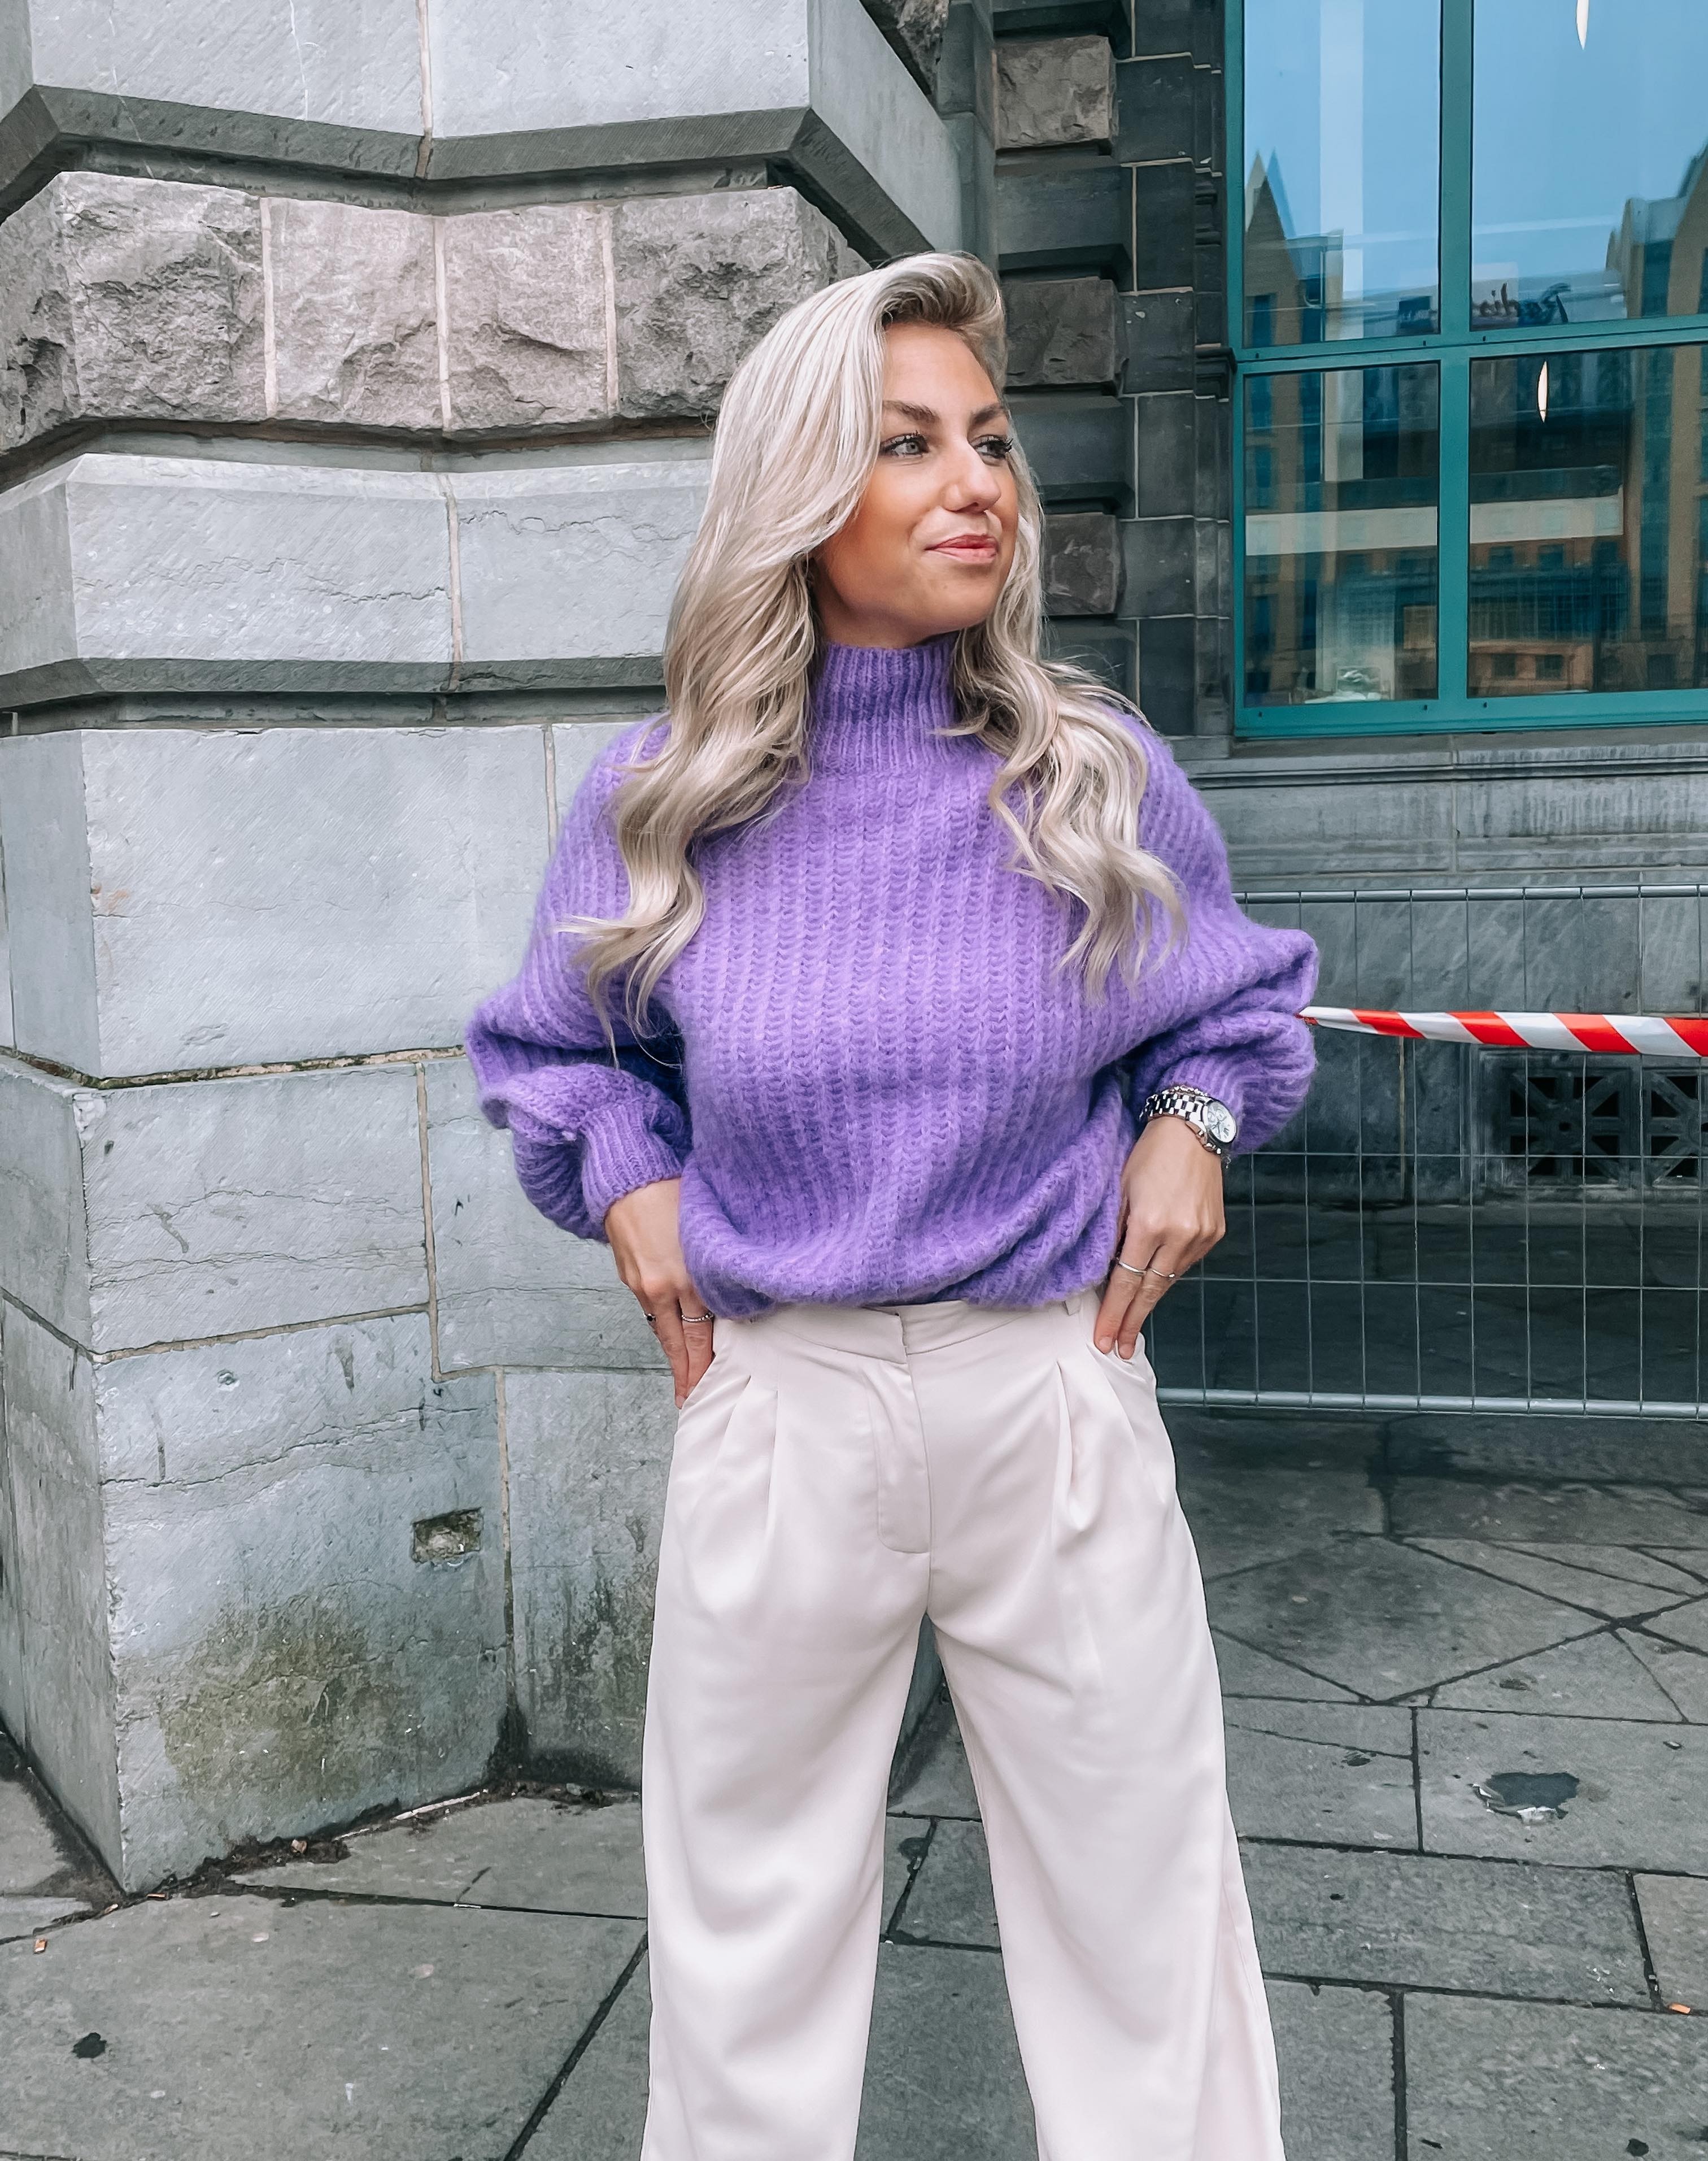 Claire sweater purple